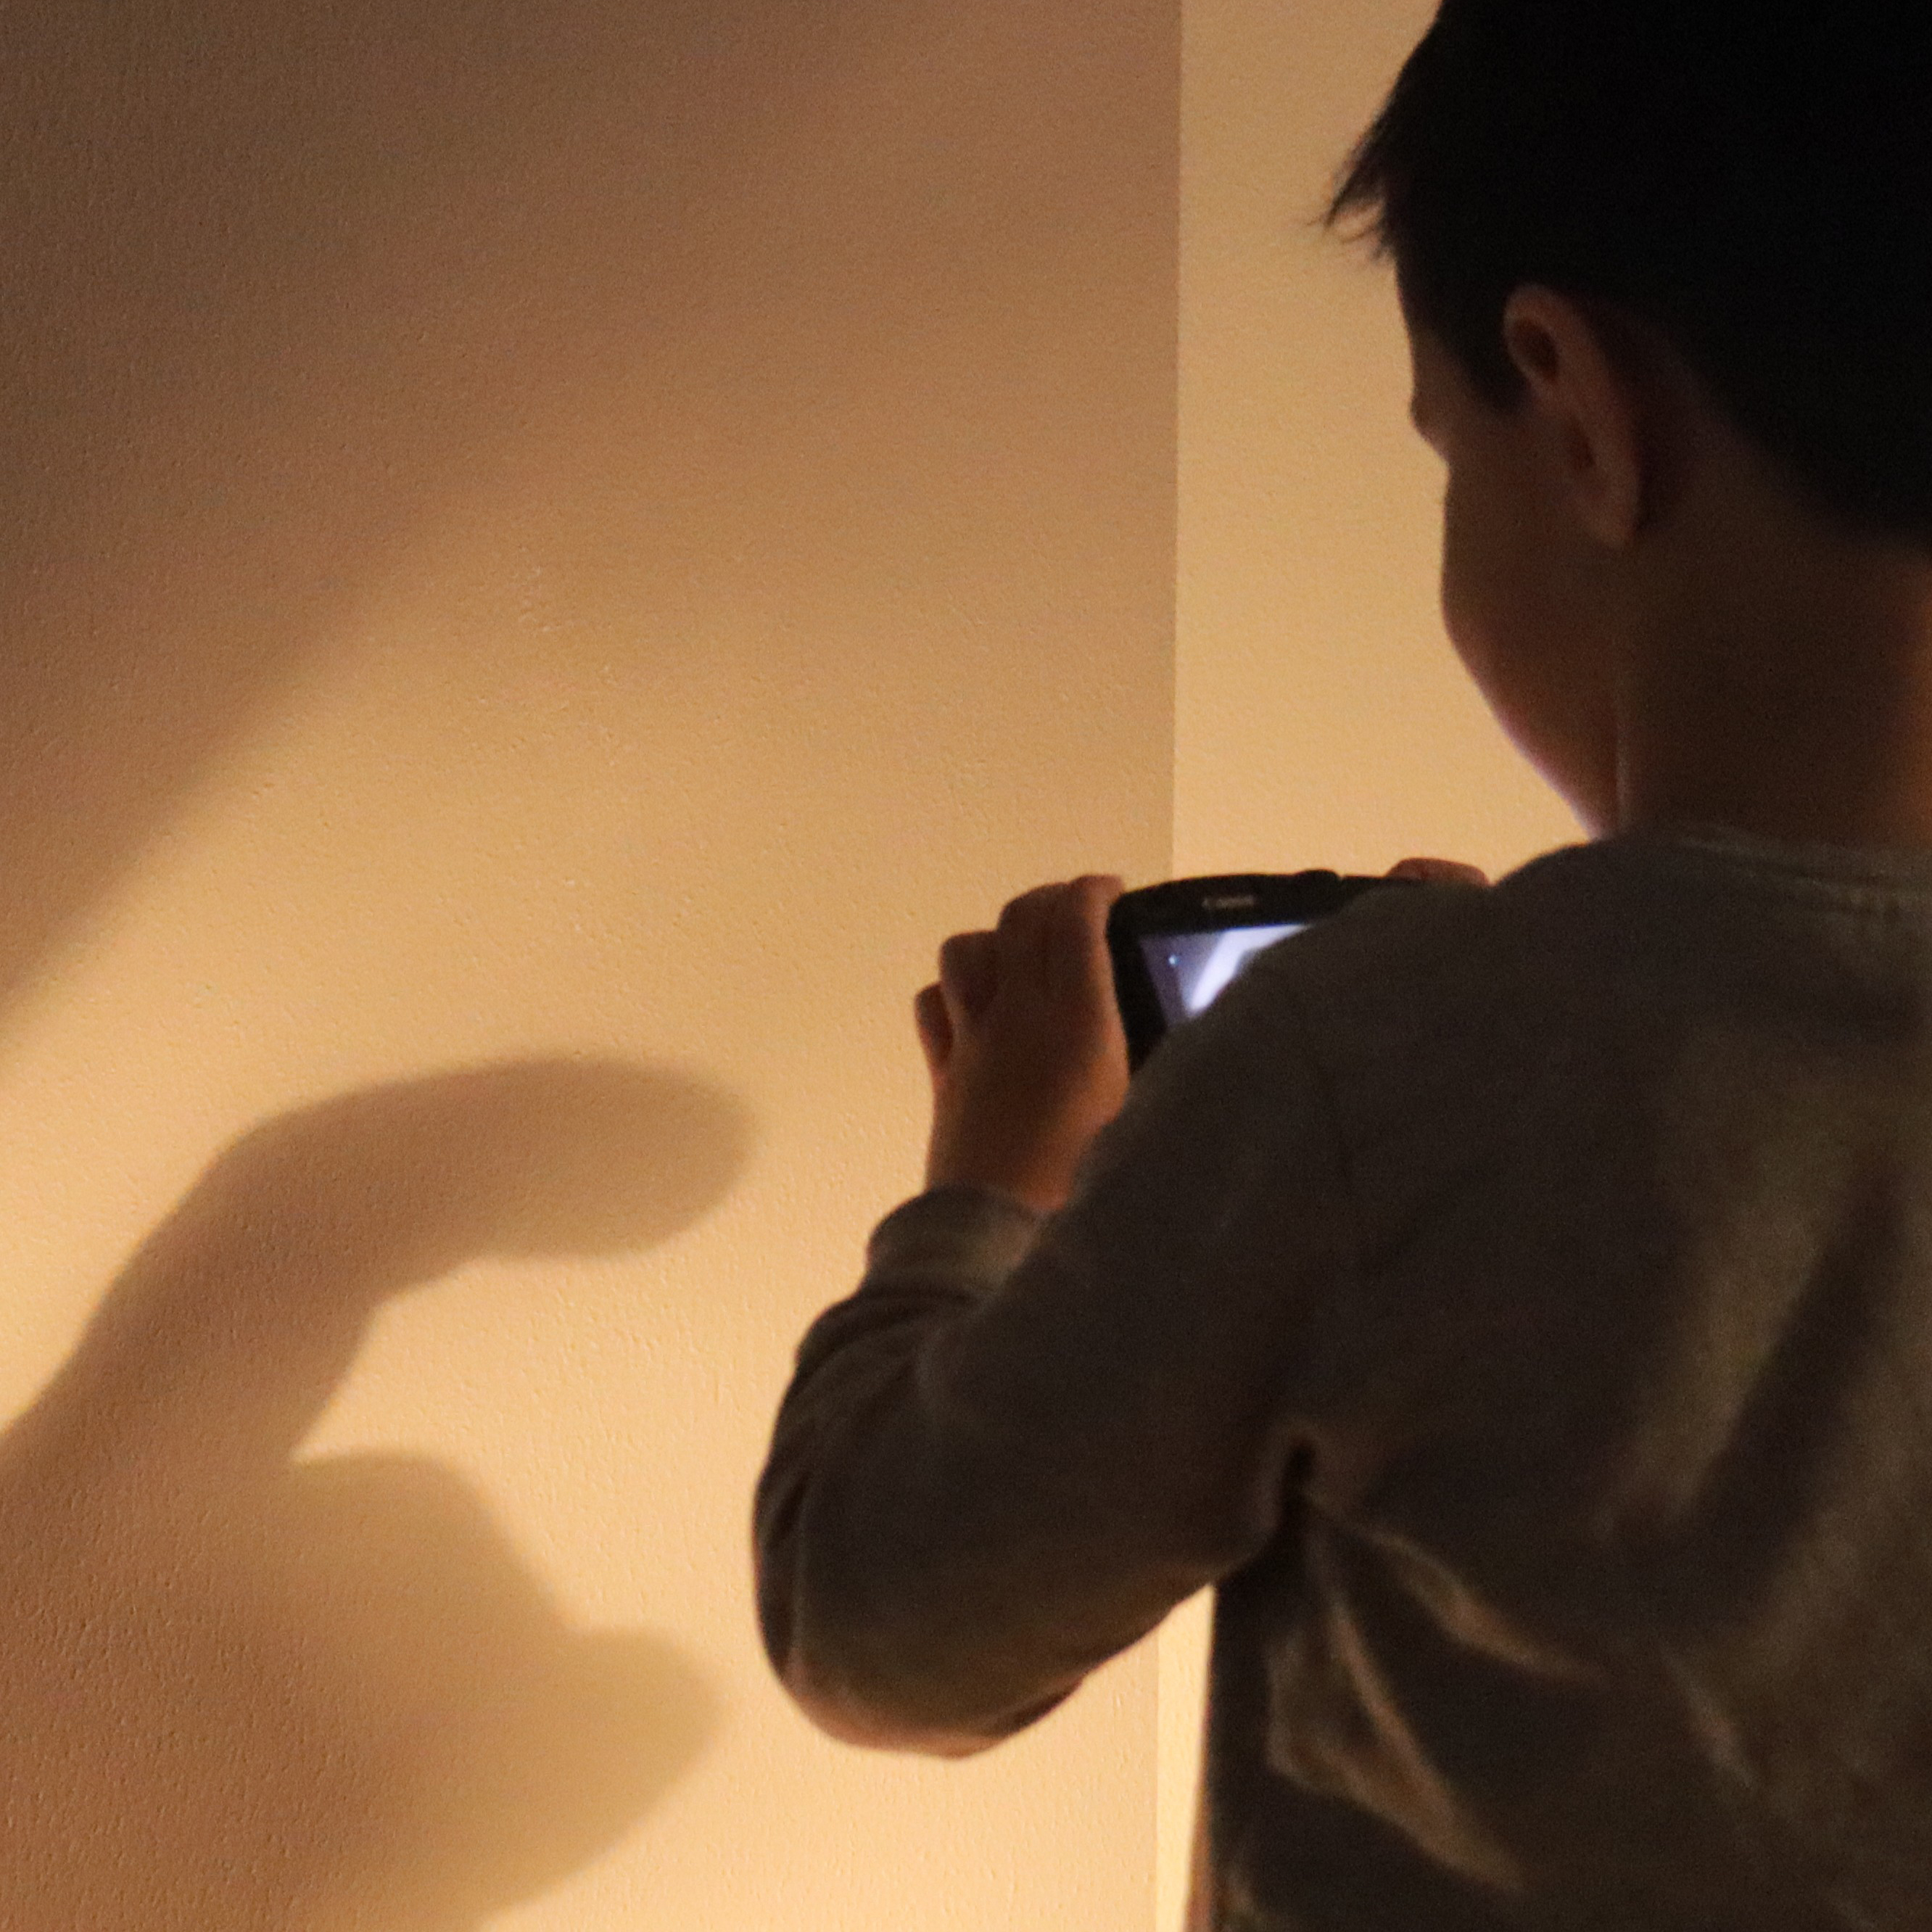 Konzentriert werden Schattenbilder fotografiert. Foto: Minifilmclub